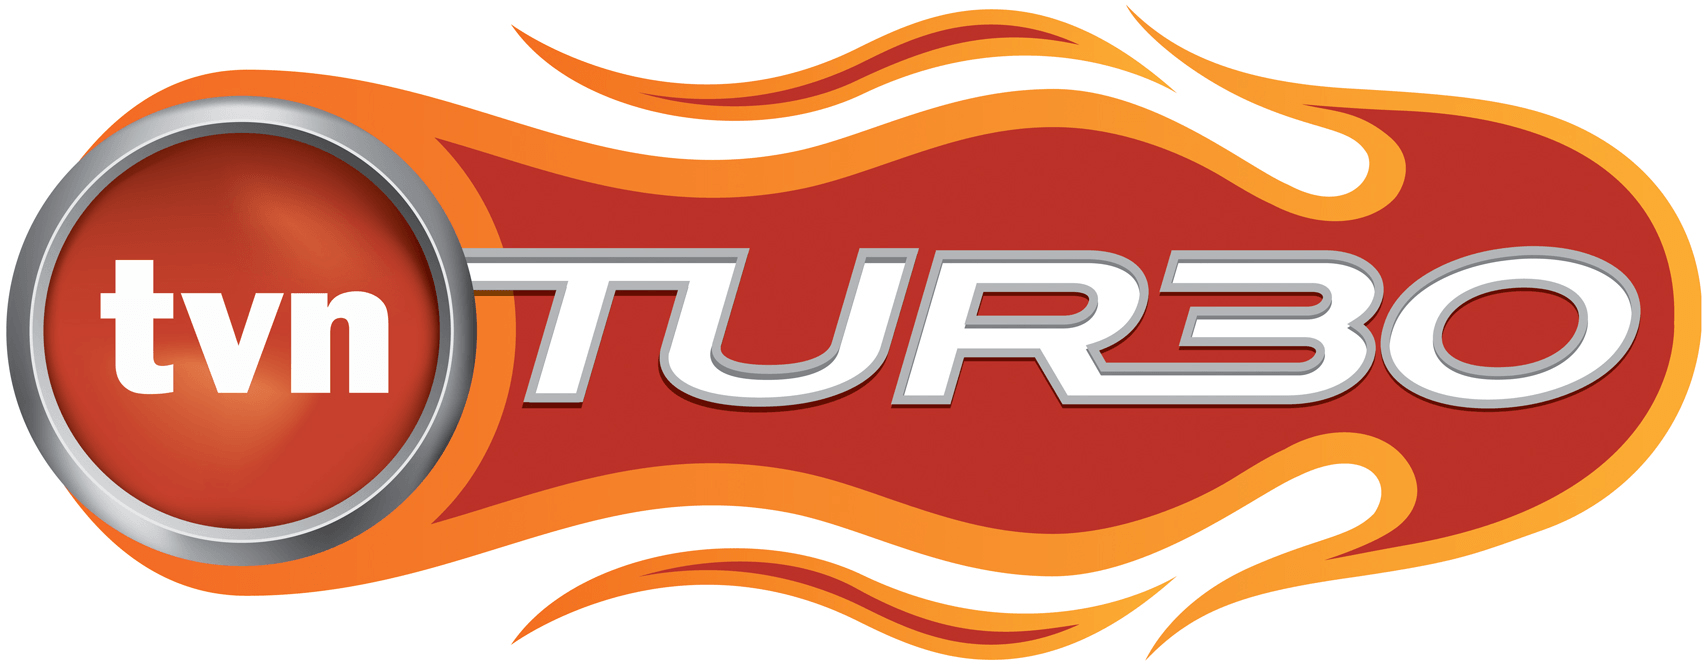 Turbo Logo - TVN Turbo logo.png